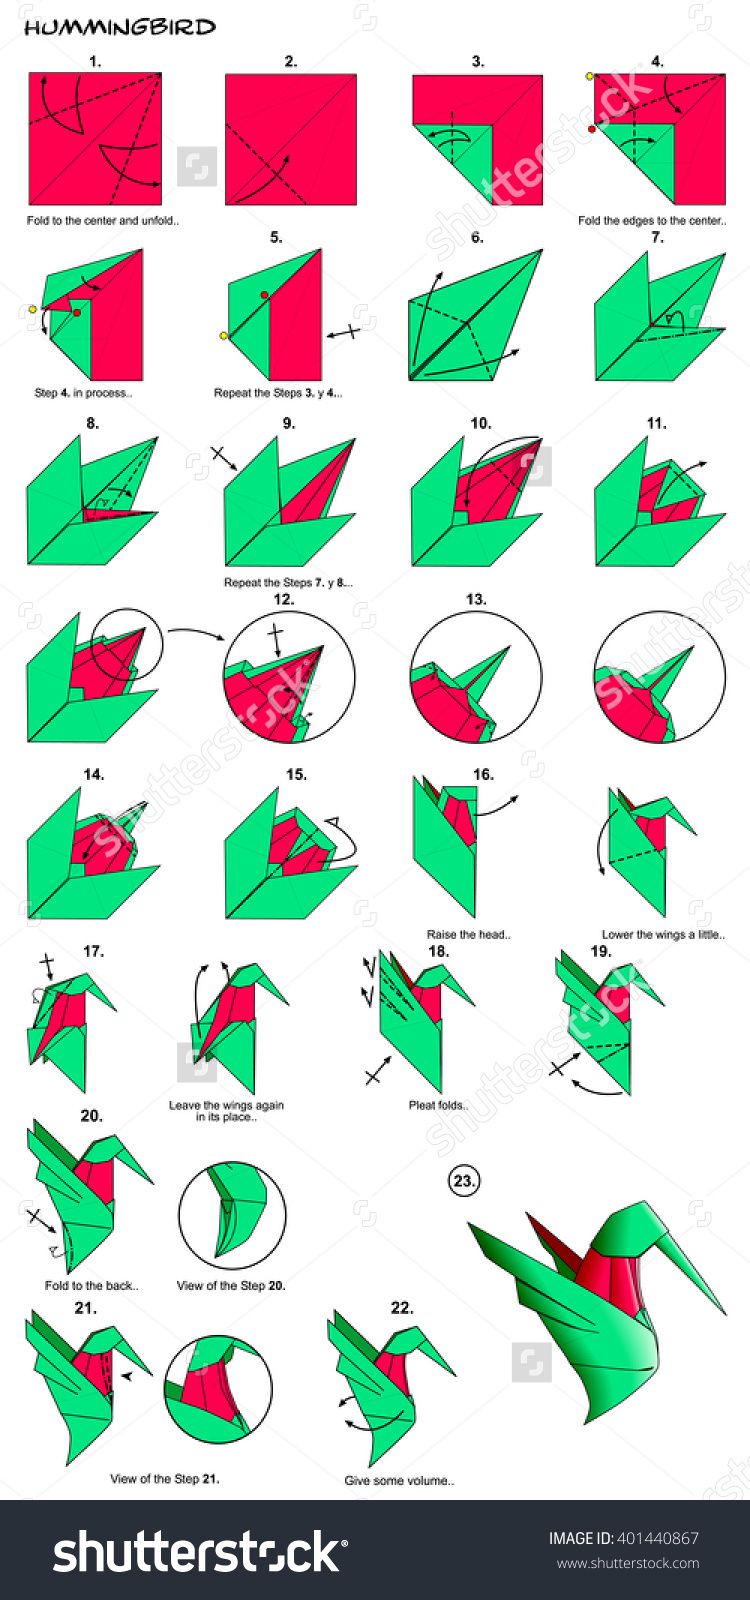 easy origami bird instructions